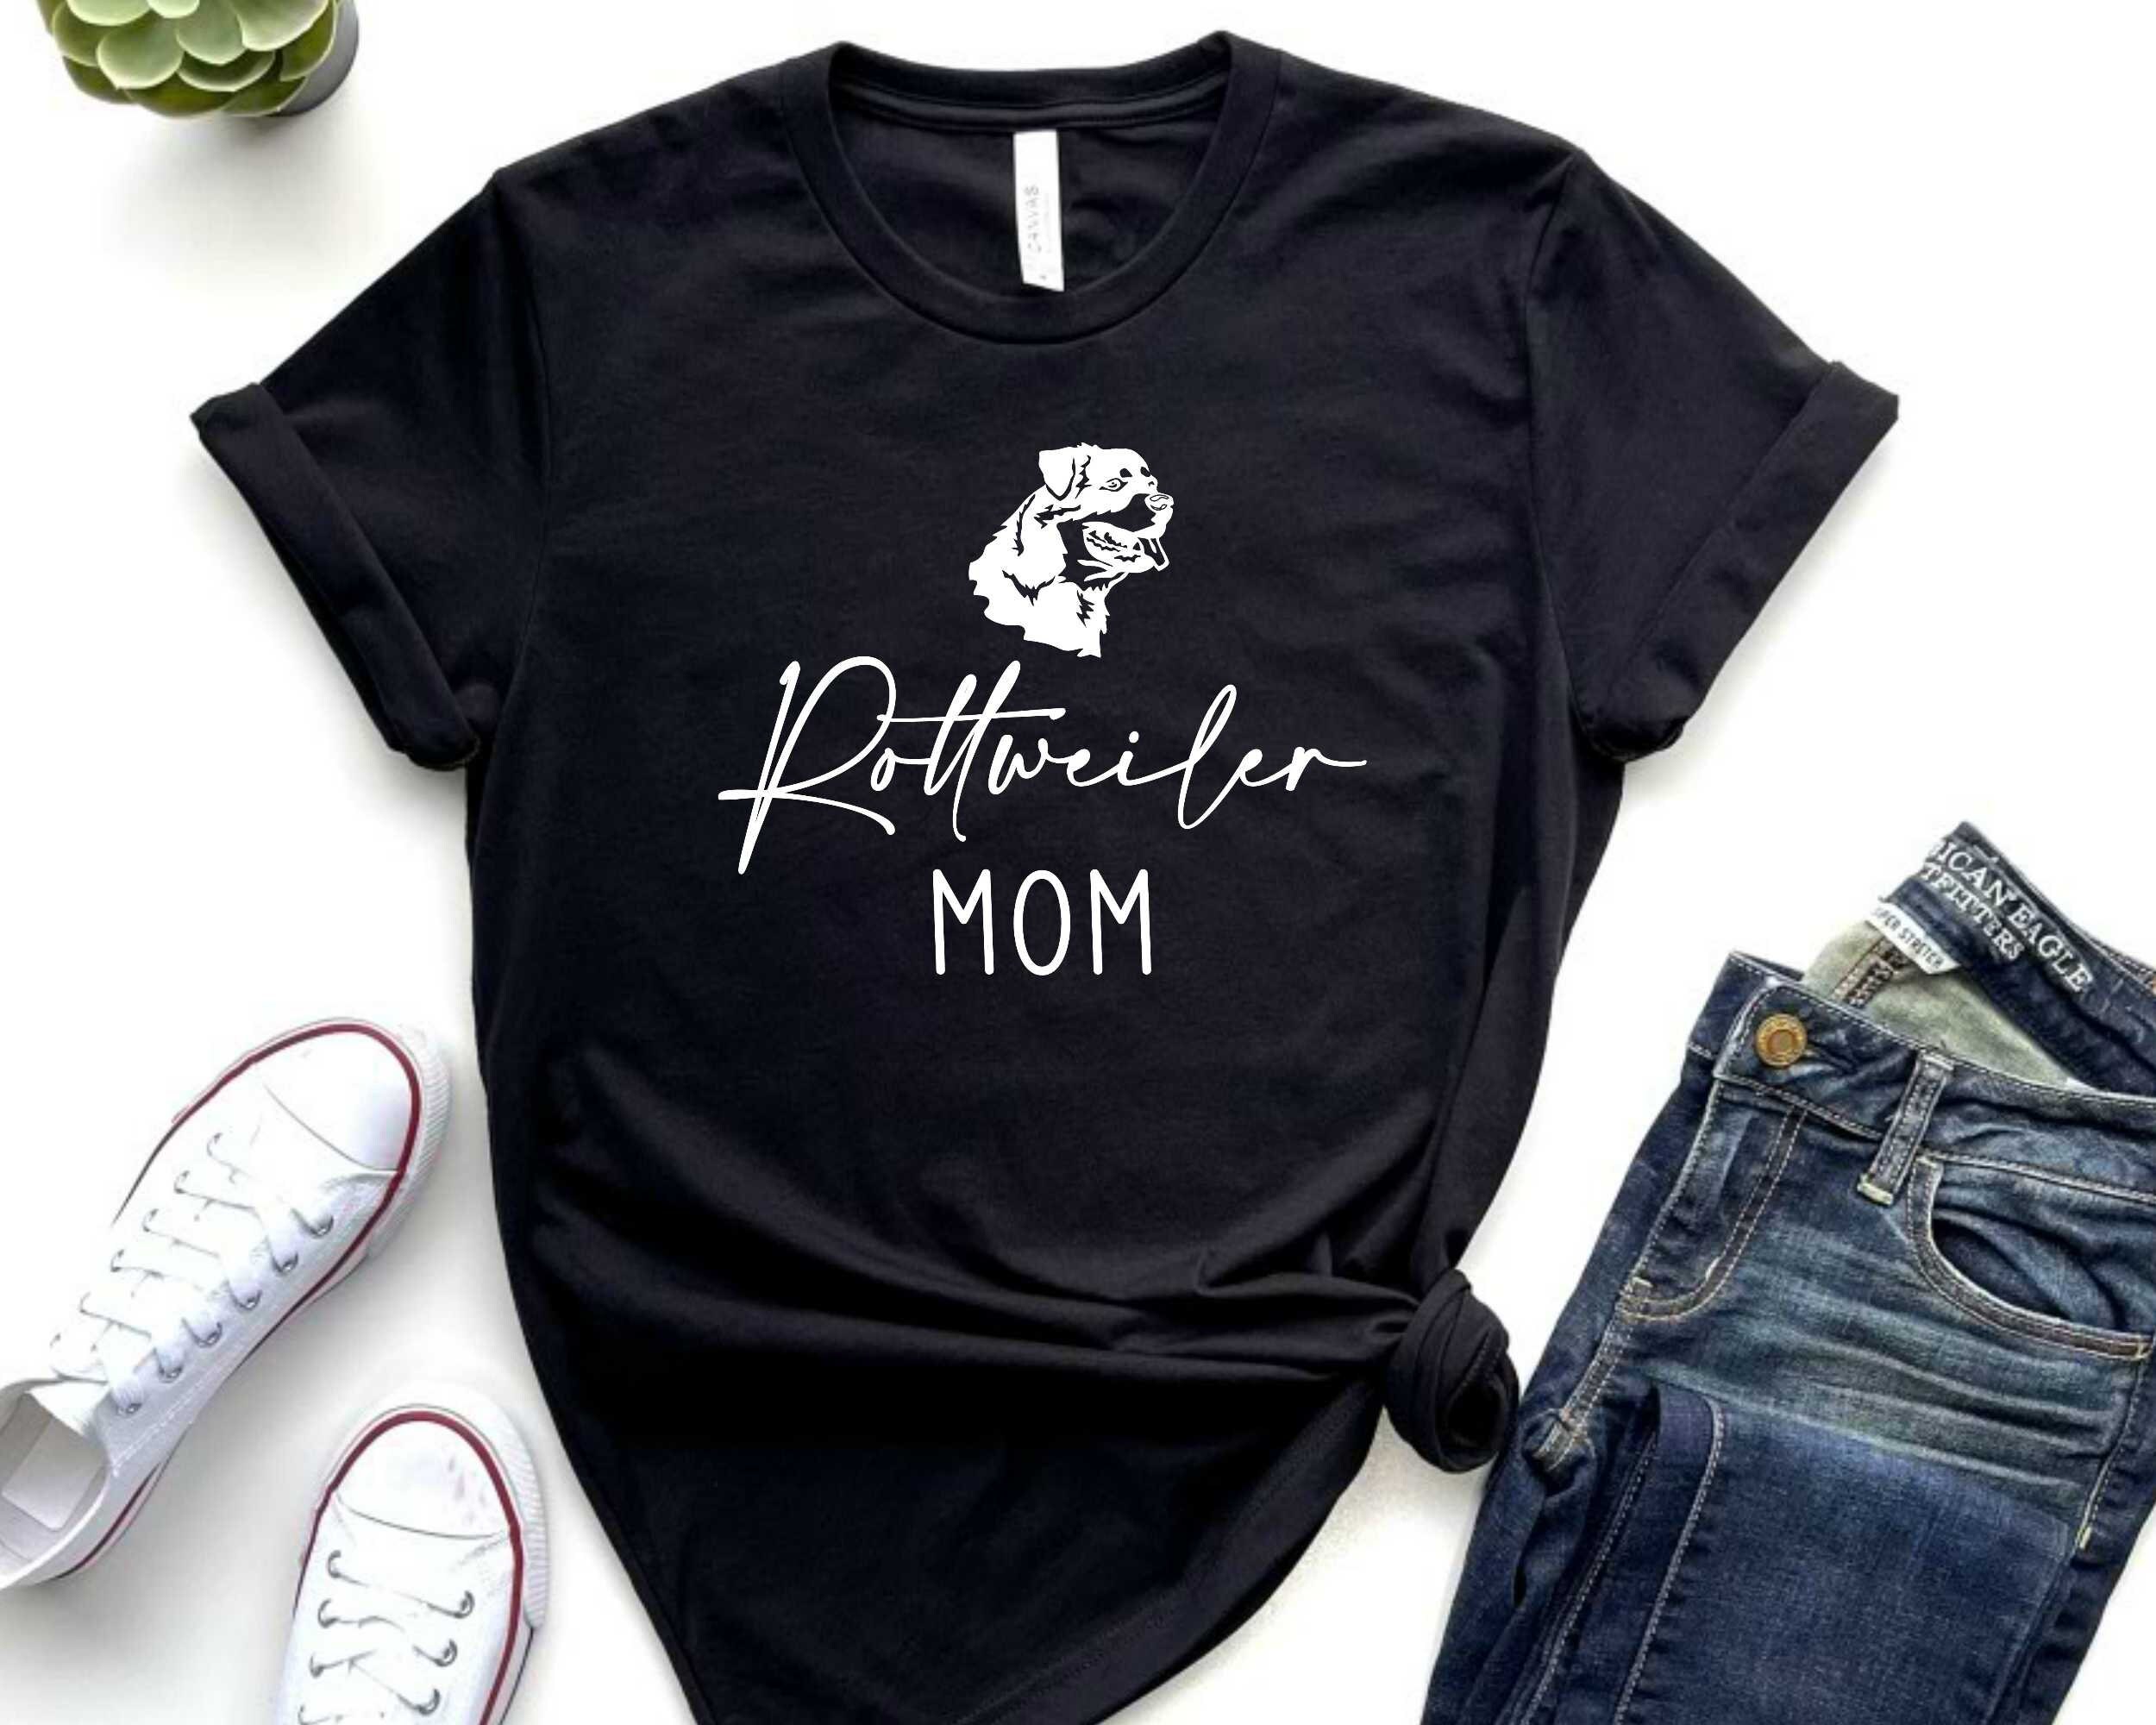 Discover Rottweiler Mom Shirt, Rottweiler Mom Tshirt or Long sleeve Shirt for Women, Rottweiler Mom T Shirt for Her Owners Birthday